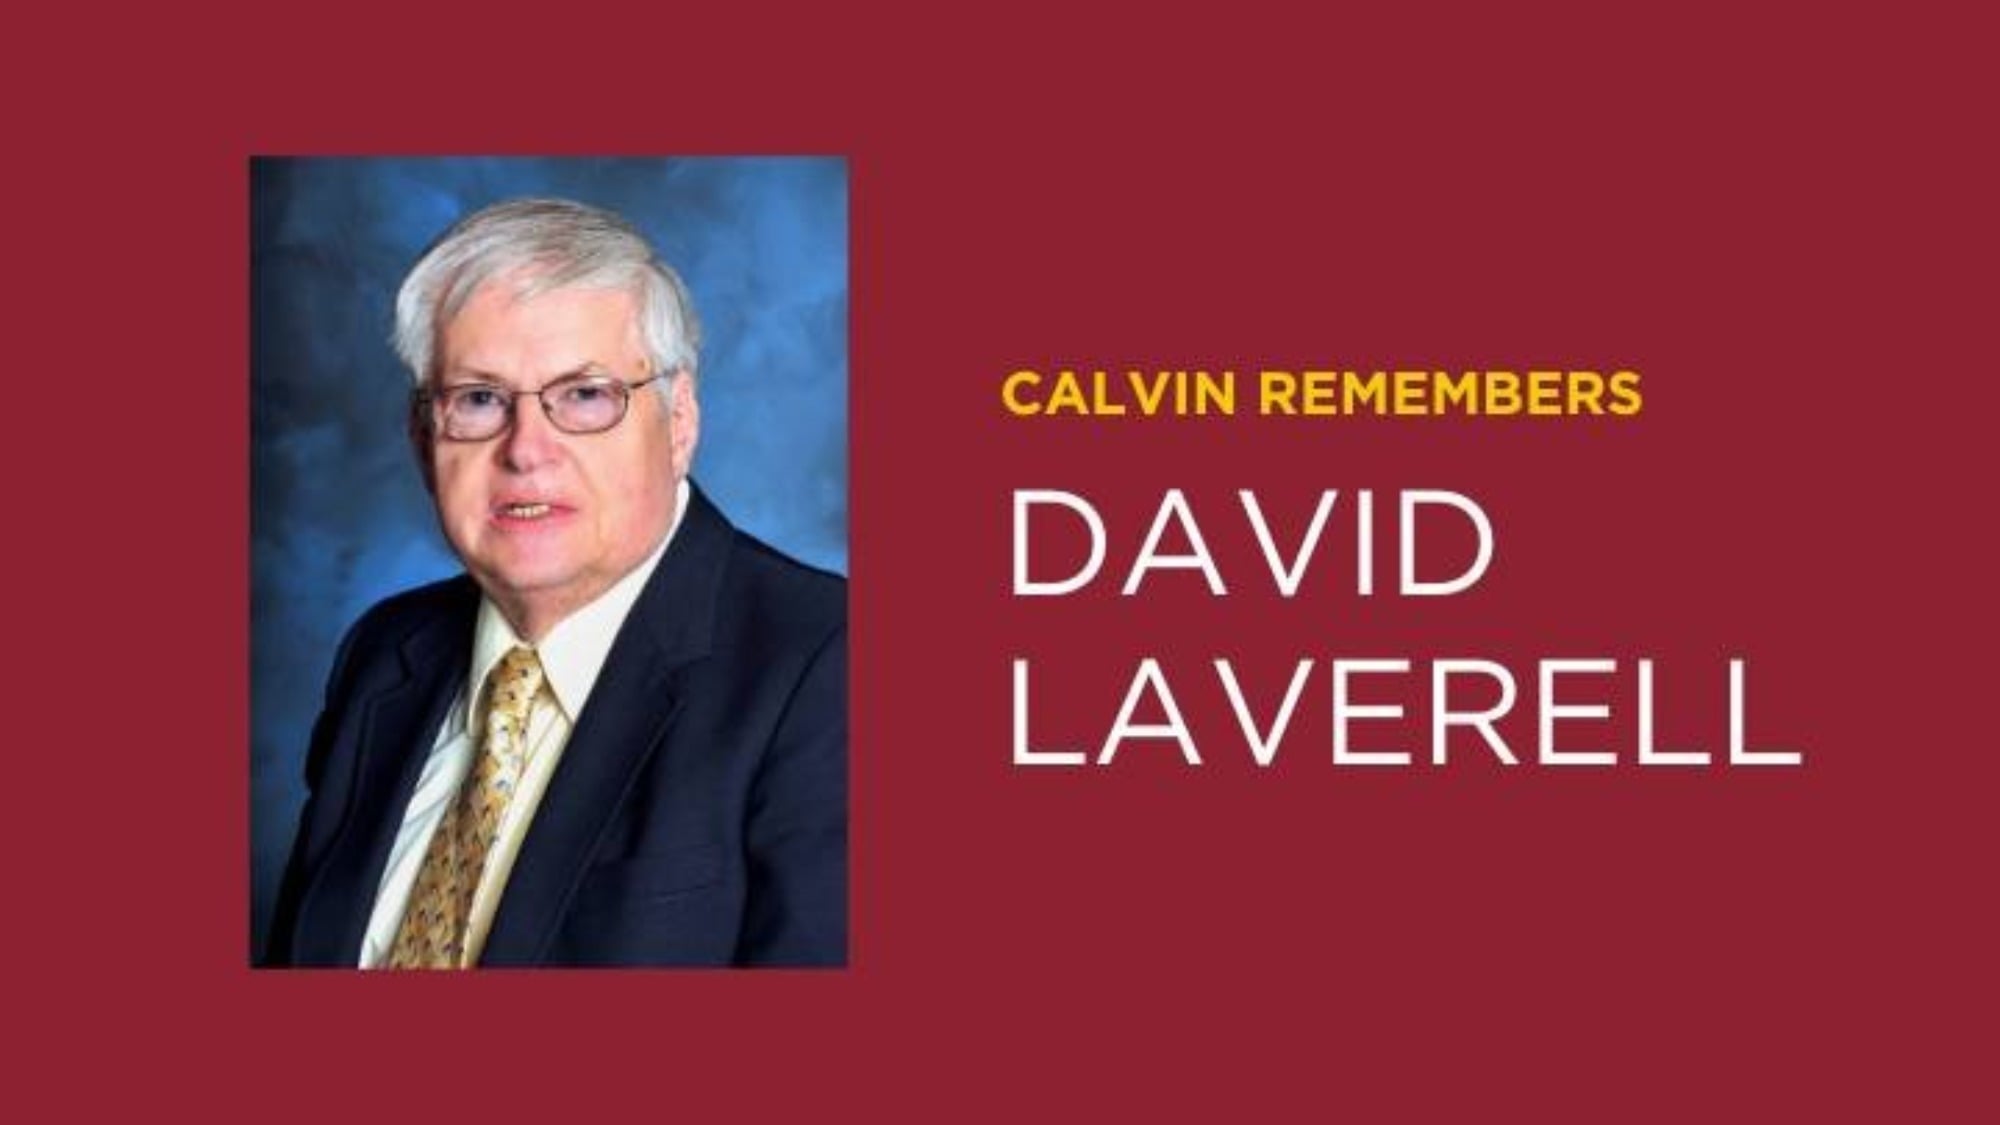 An image of David Laverell